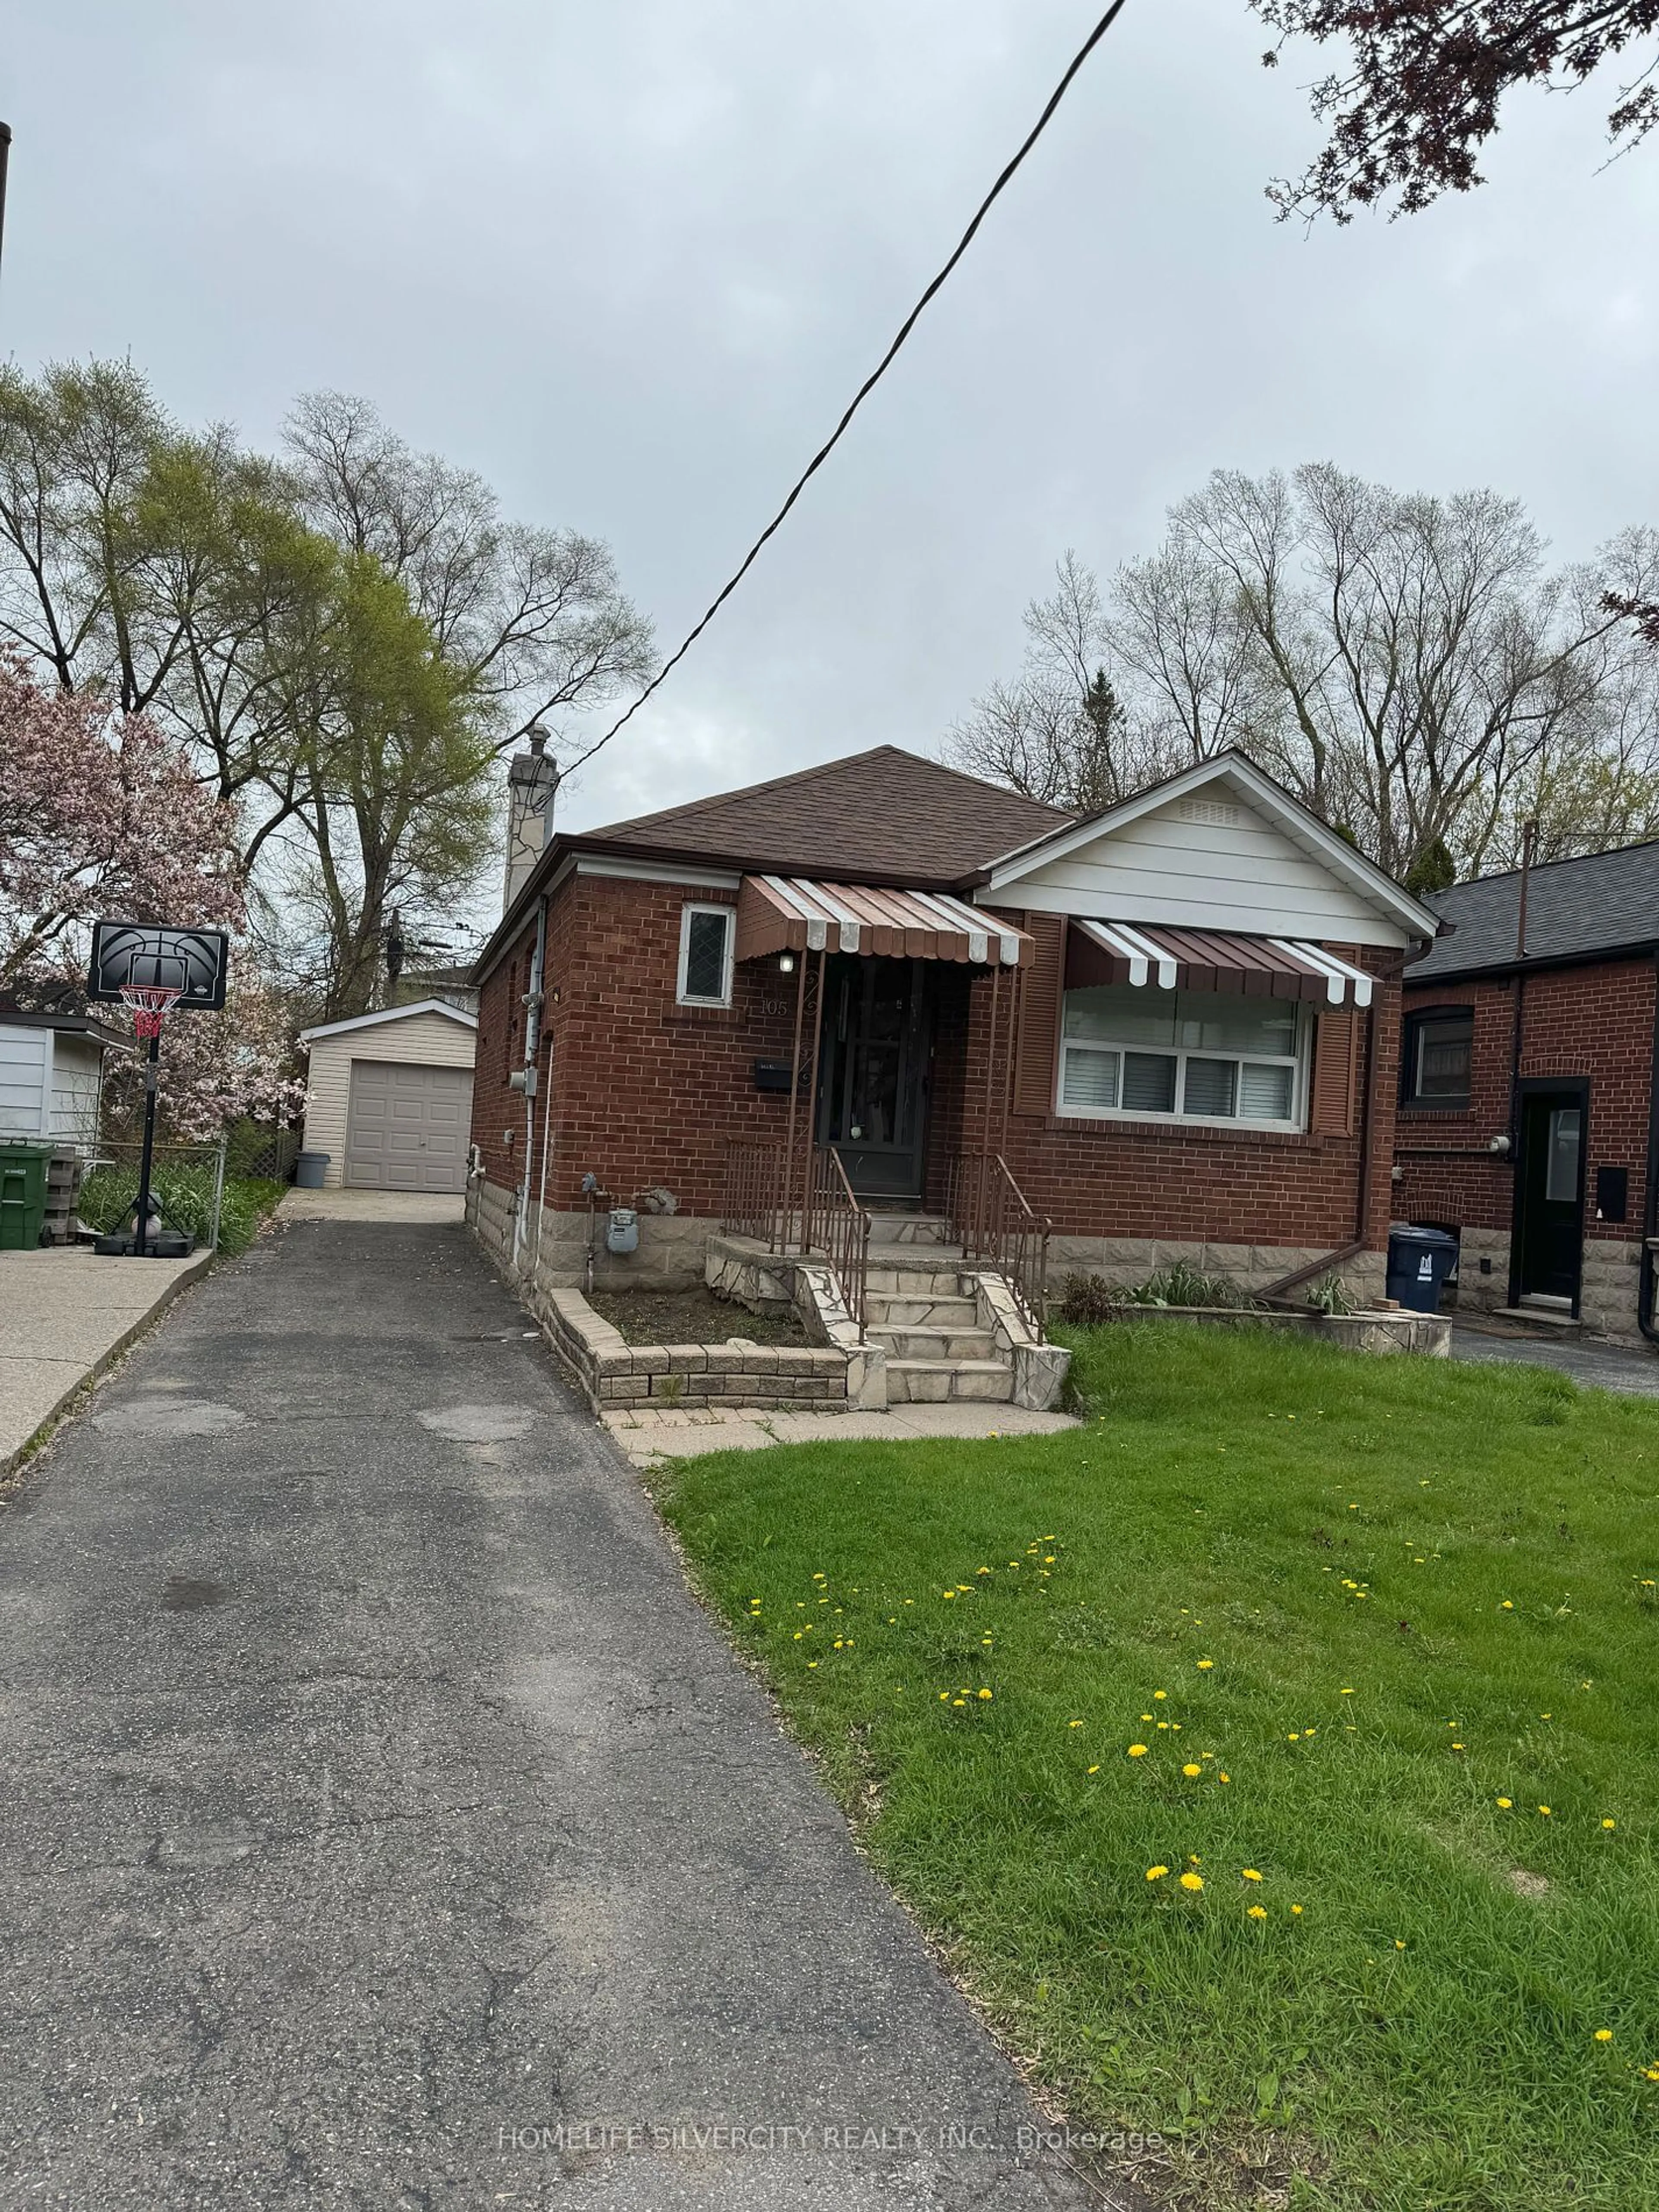 Frontside or backside of a home for 105 St Hubert Ave, Toronto Ontario M4J 3Z5